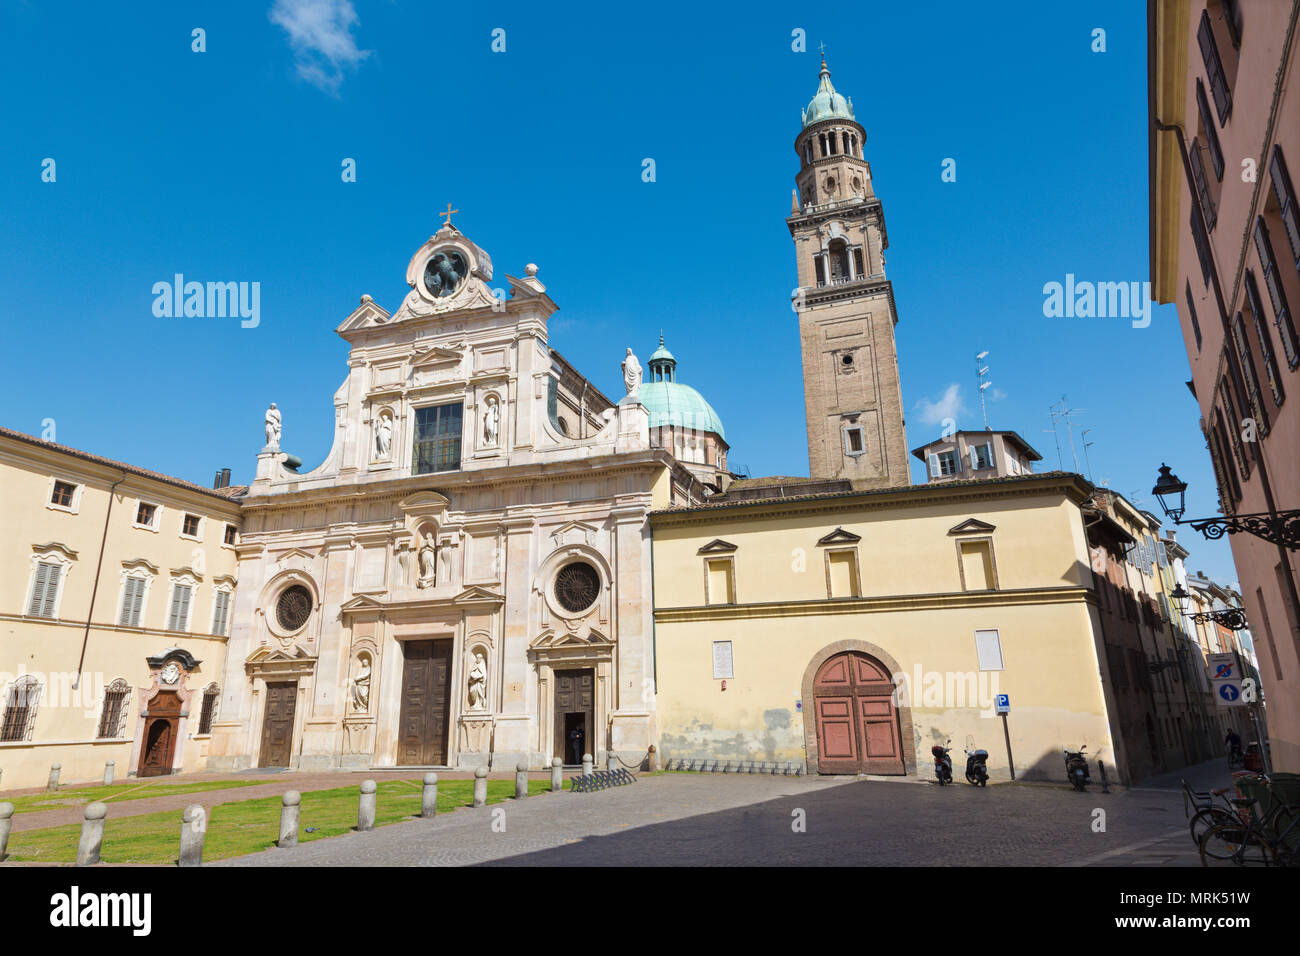 Parma - The baroque church Chiesa di San Giovanni Evangelista (John the Evangelist). Stock Photo